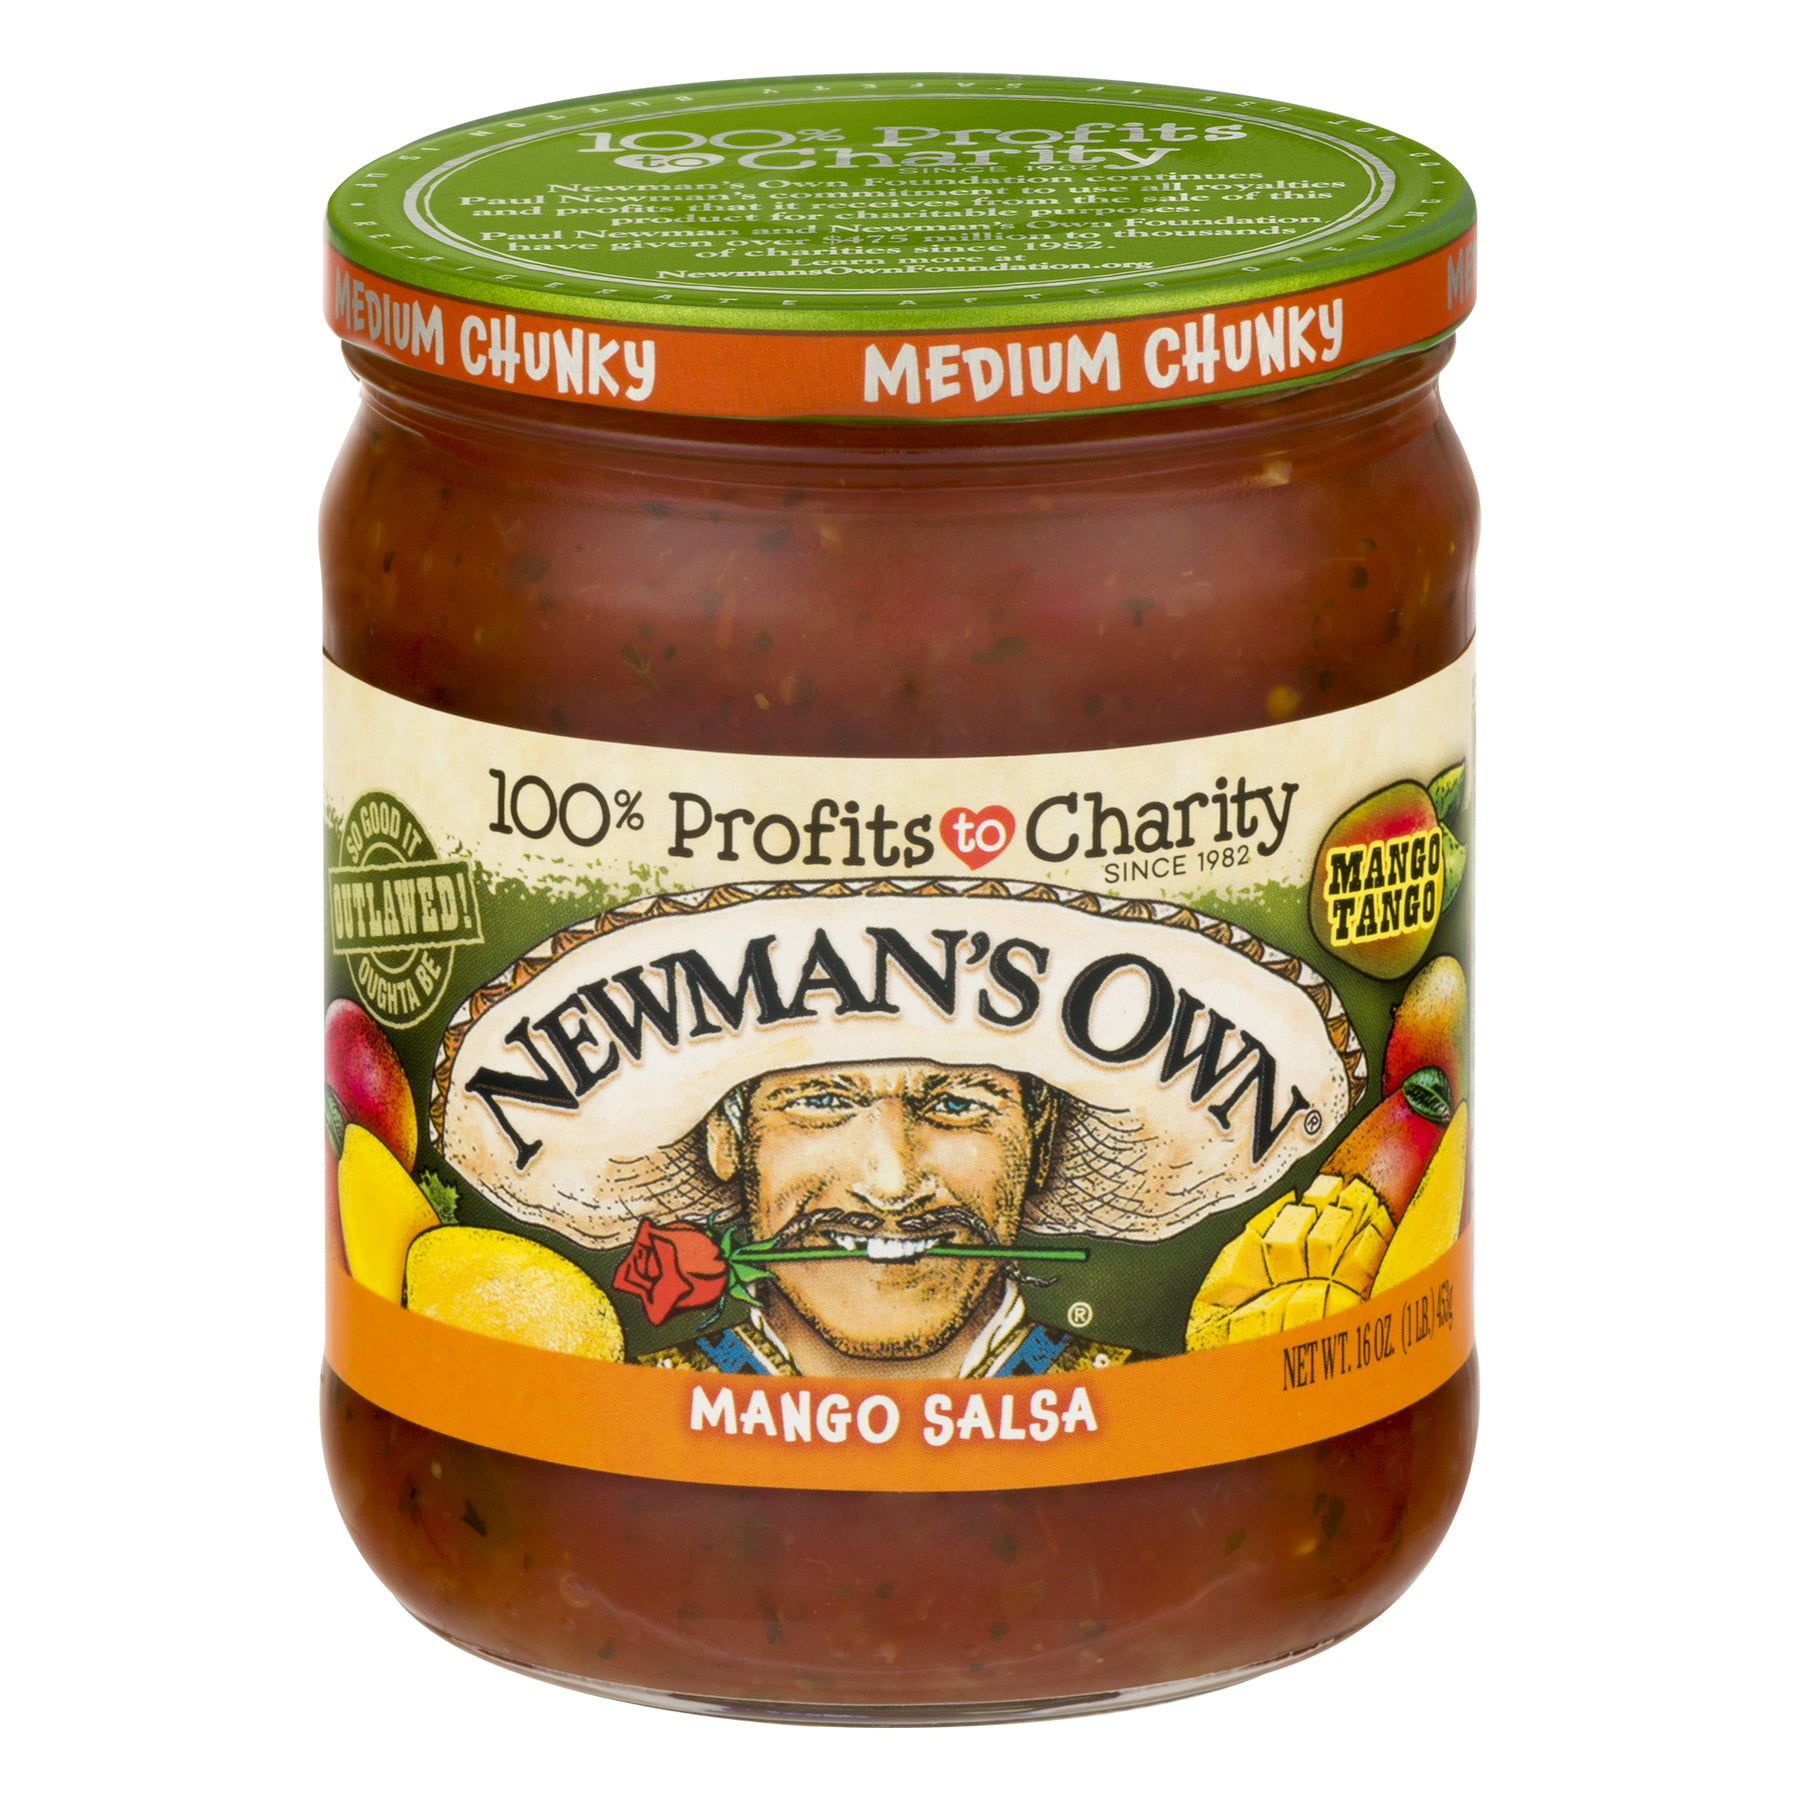 Chunk перевод. Newman’s own  соусы. Чанки продукт. Medium Salsa. Mango Salsa Espana buy.